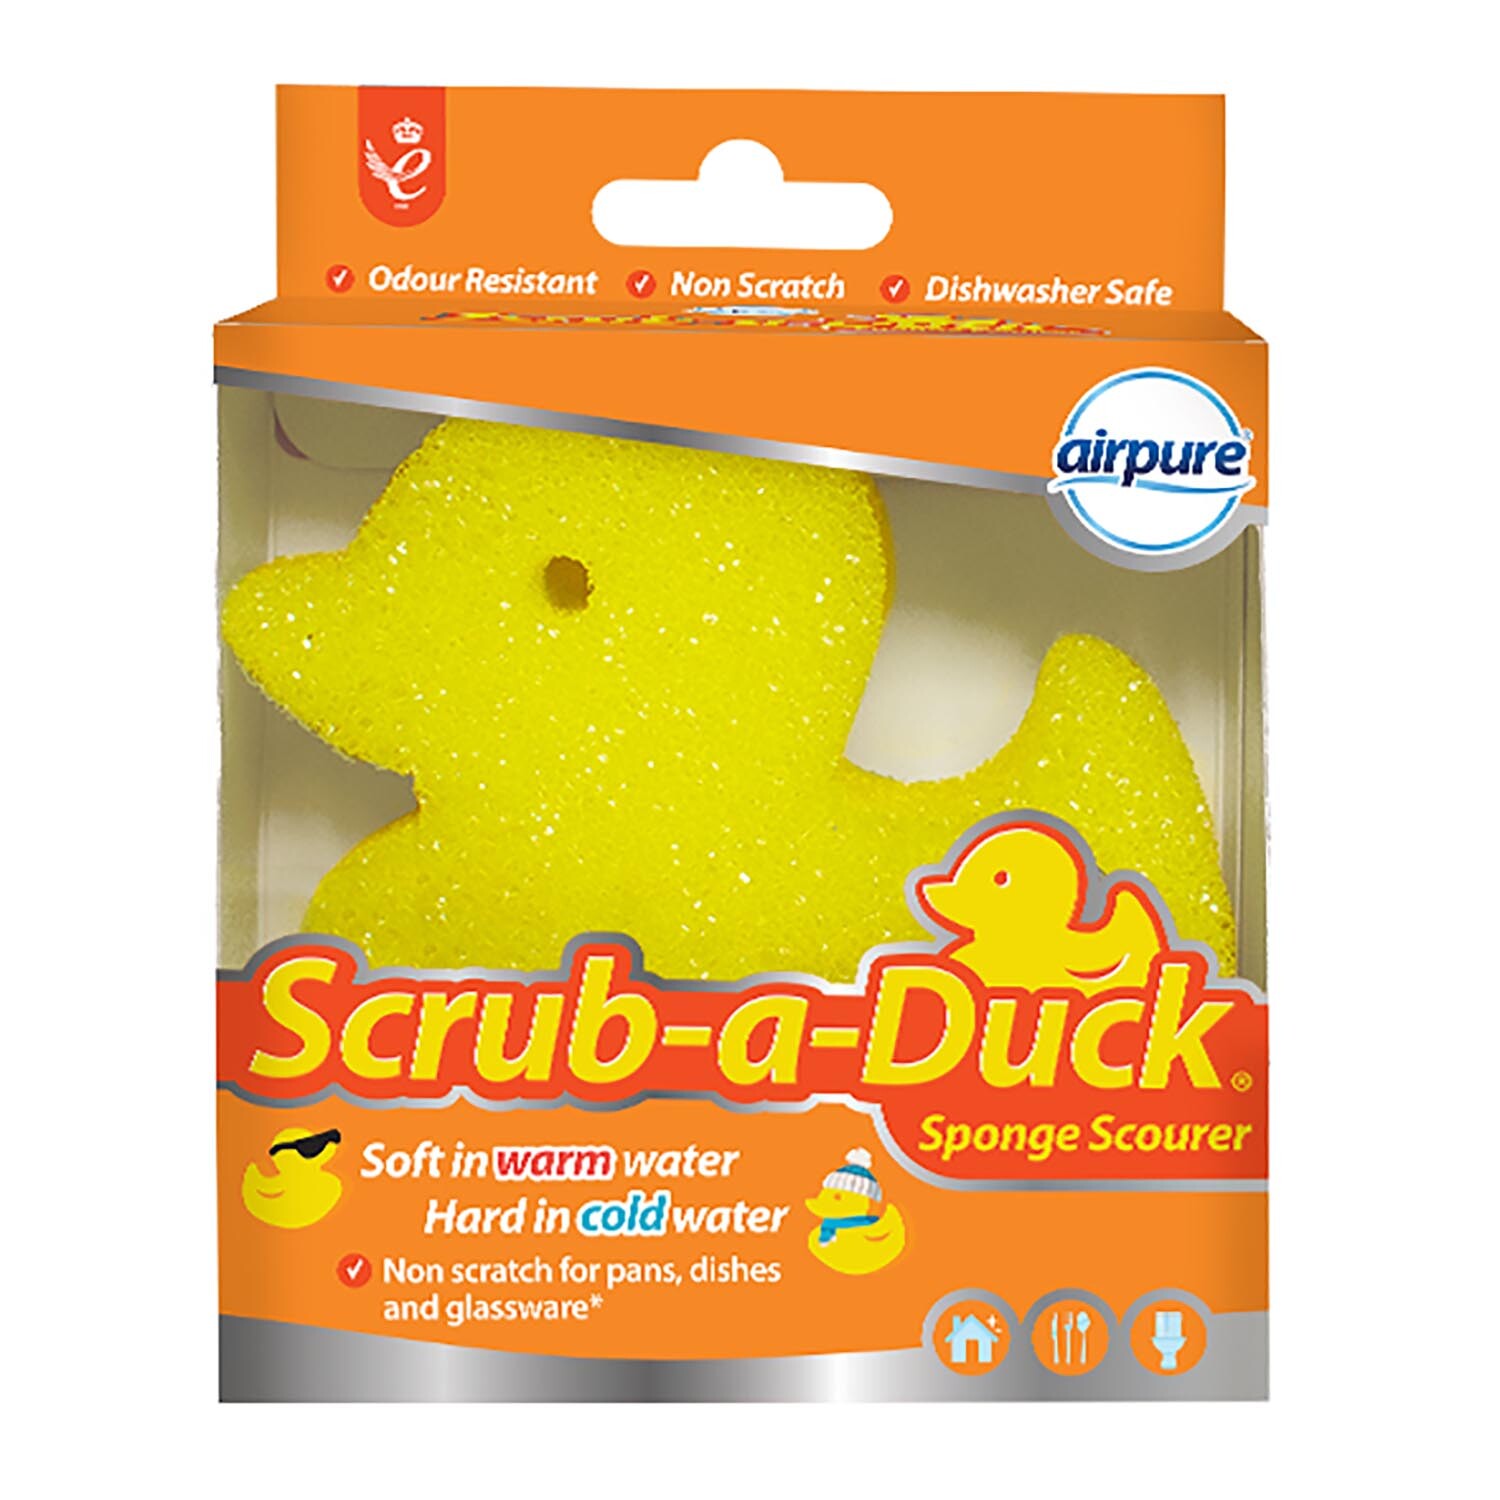 Scrub-a-Duck Sponge Scourer - Yellow Image